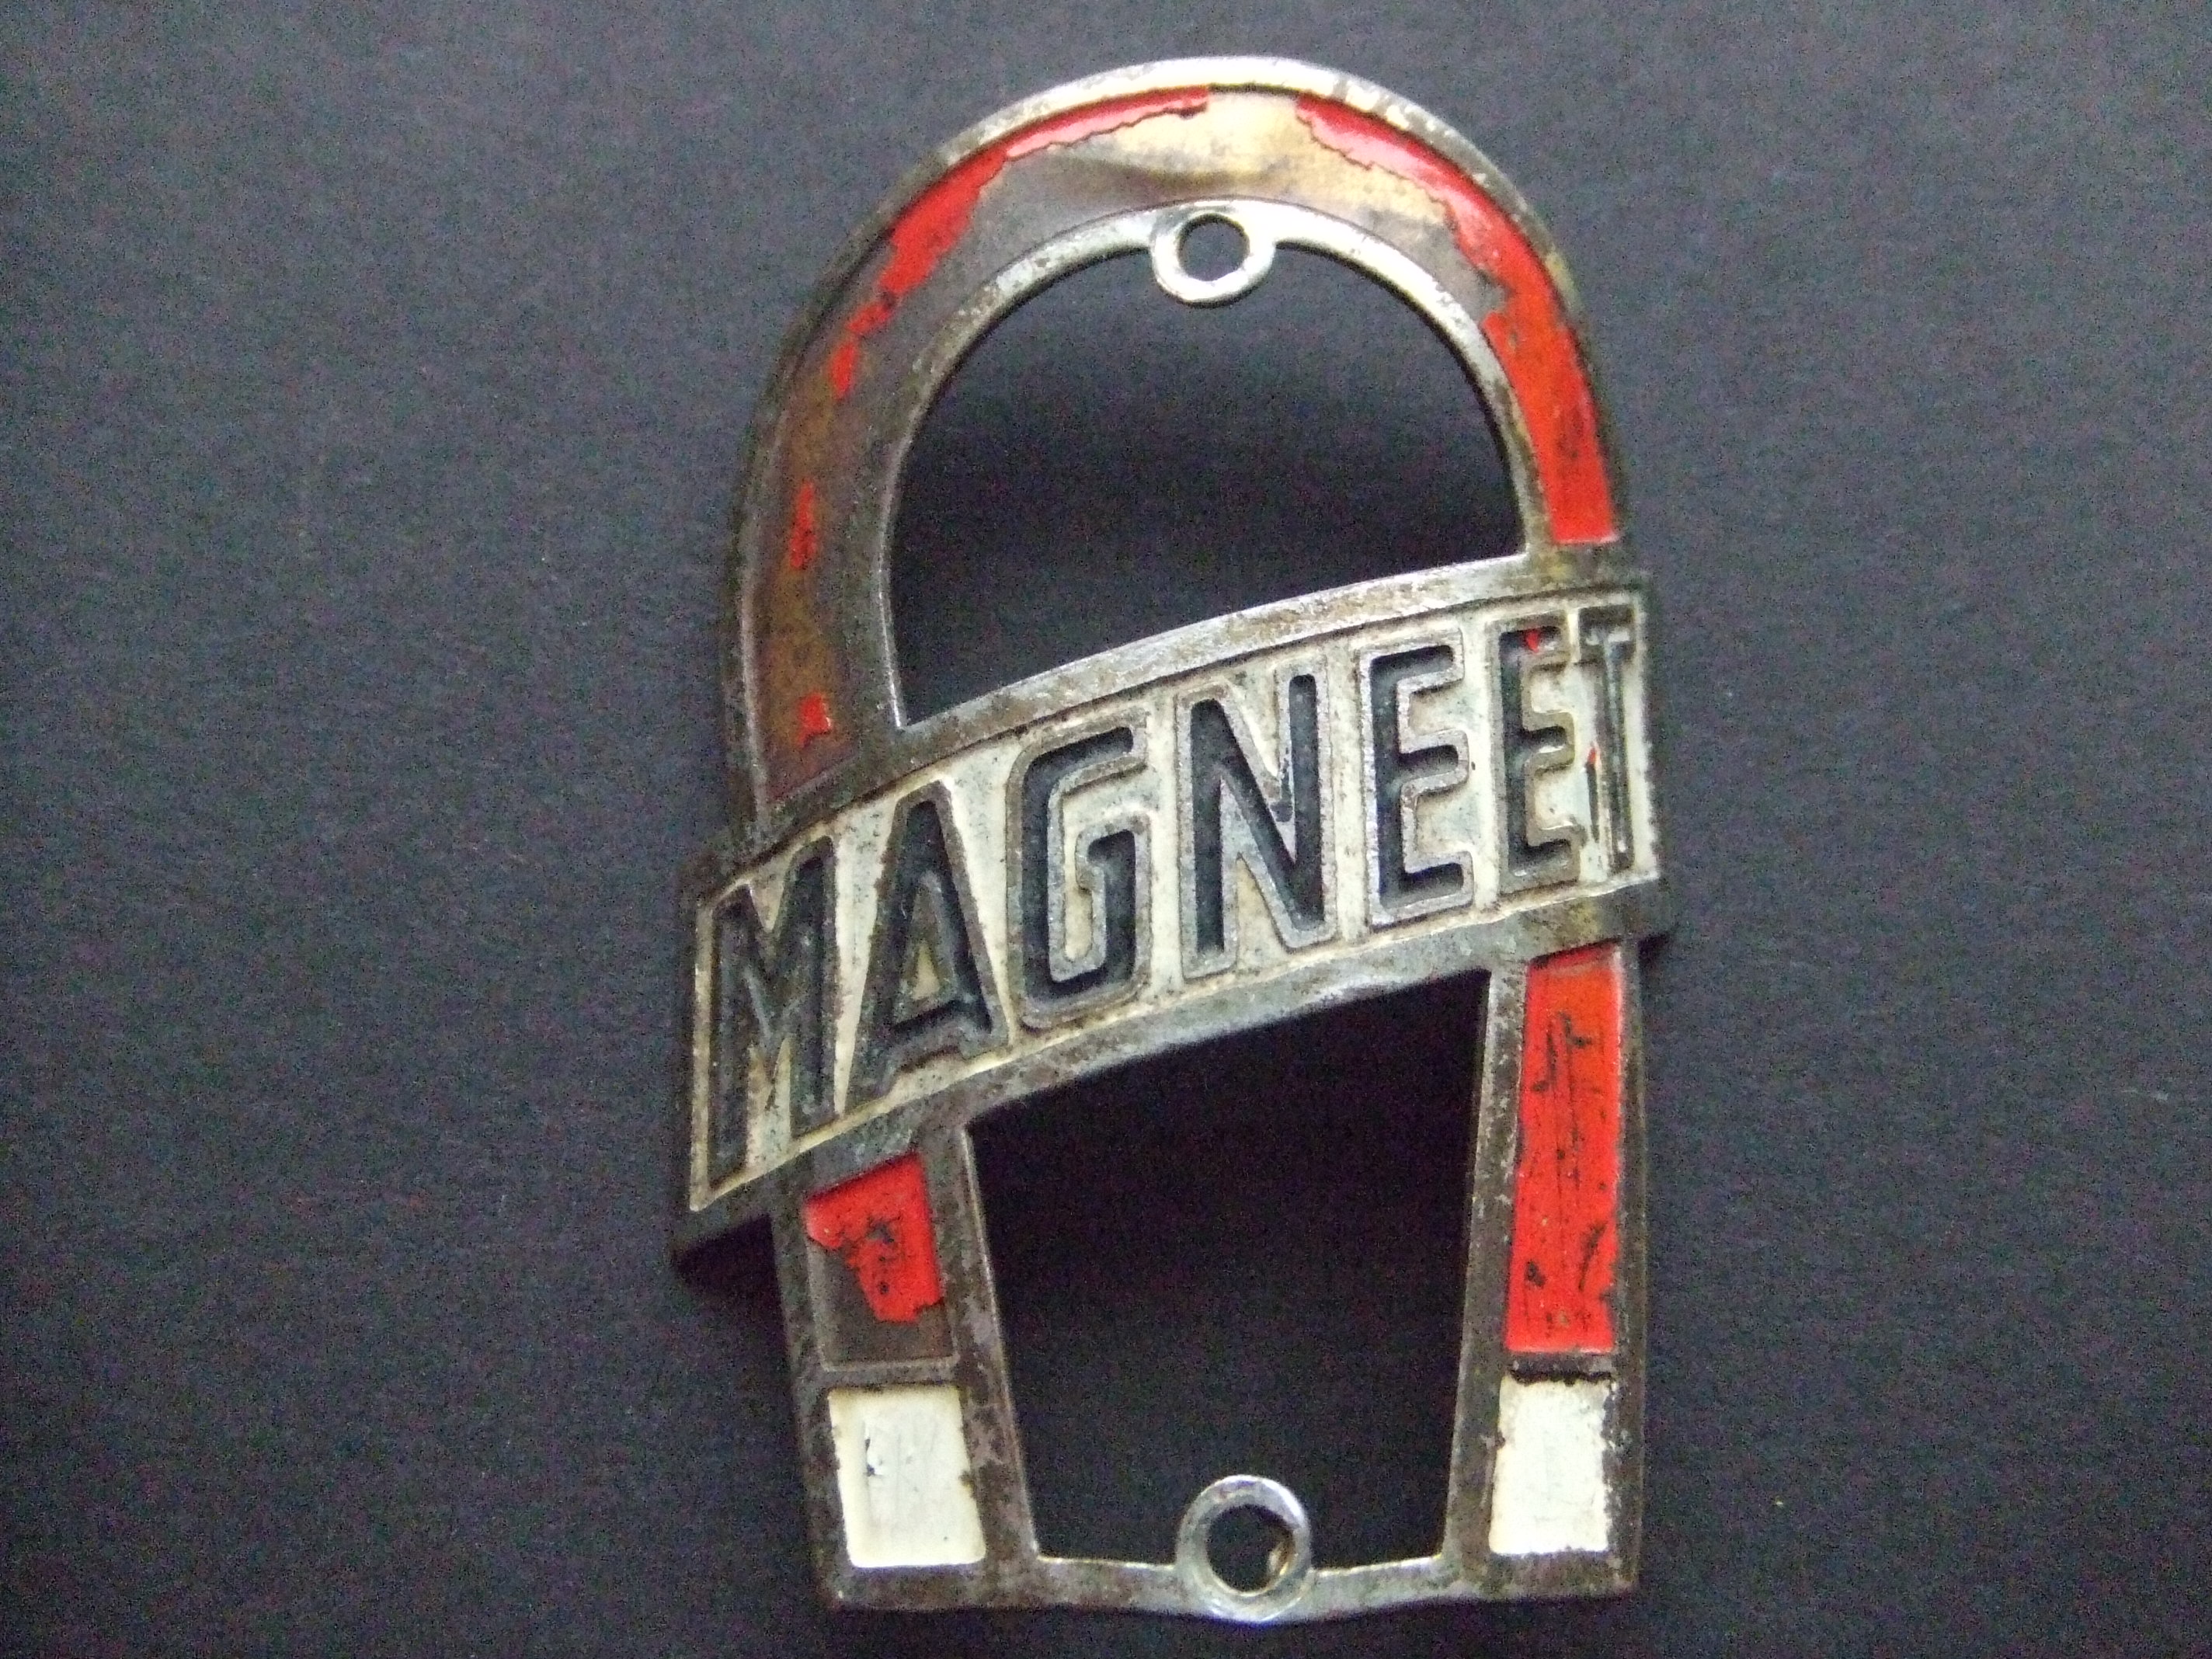 Magneet Rijwielen, Motorenfabriek Weesp oud balhoofdplaatje 13